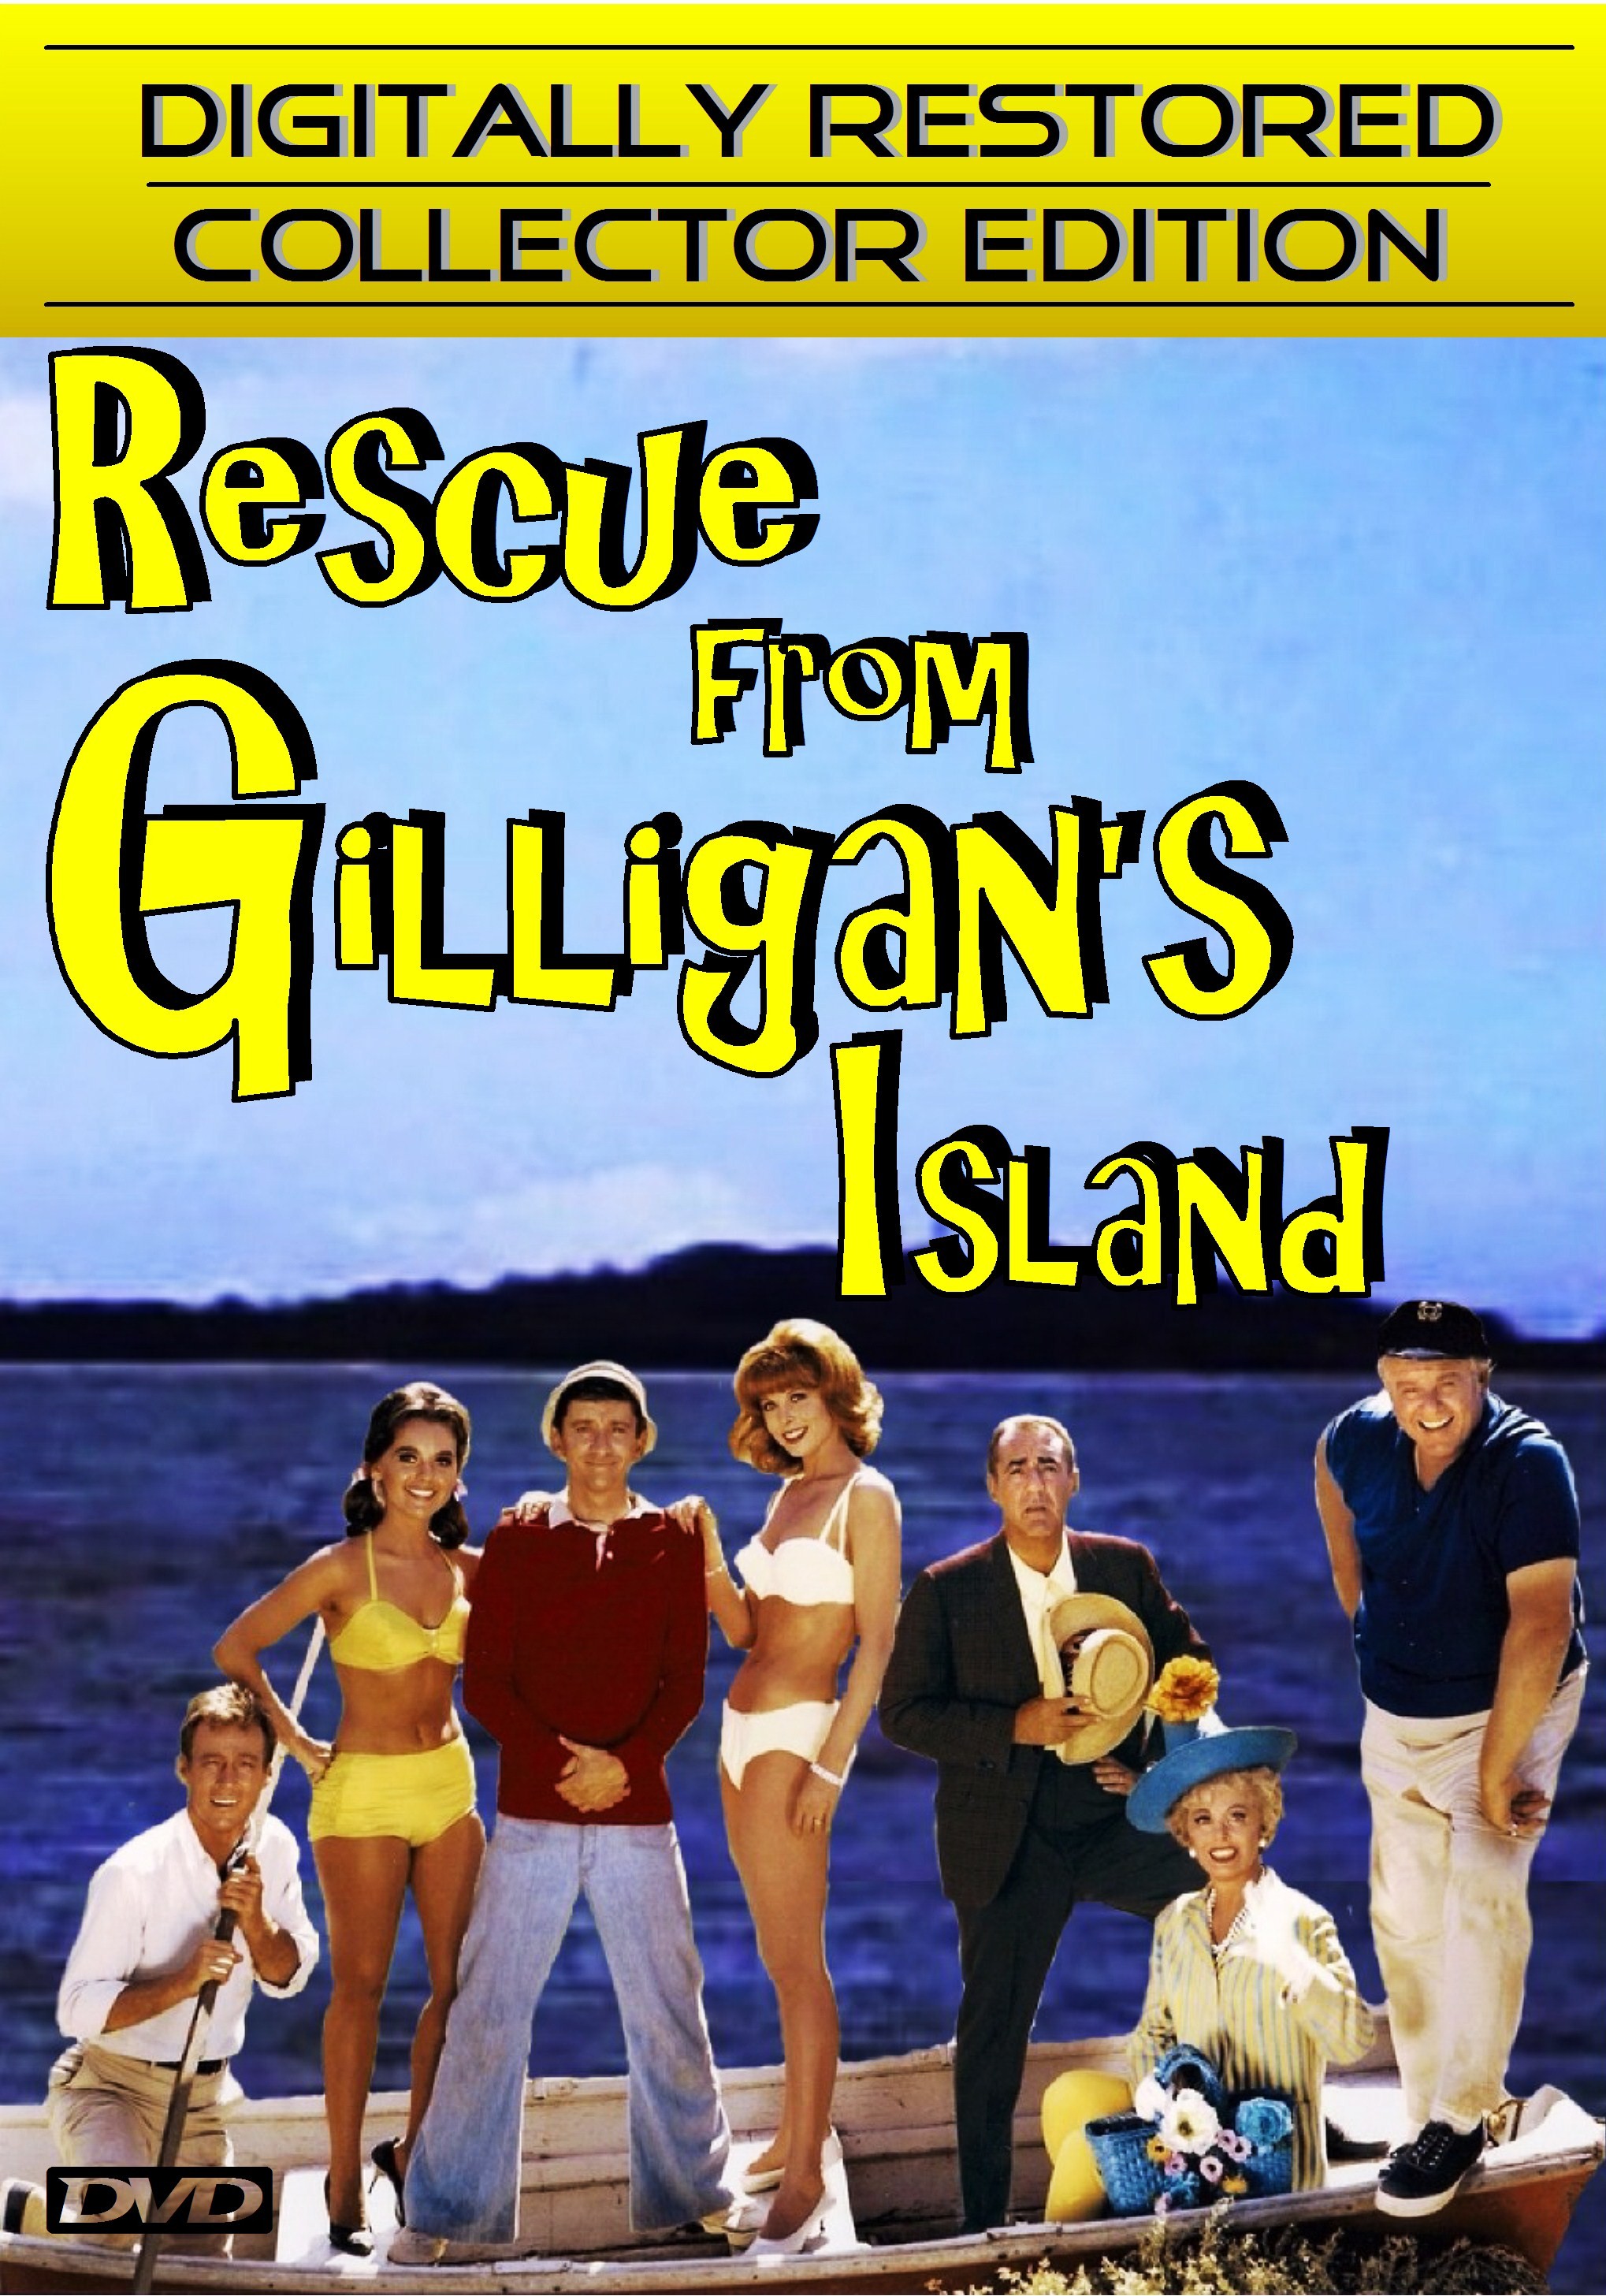 Rescue from Gilligan's Island DIGITALLY RESTORED